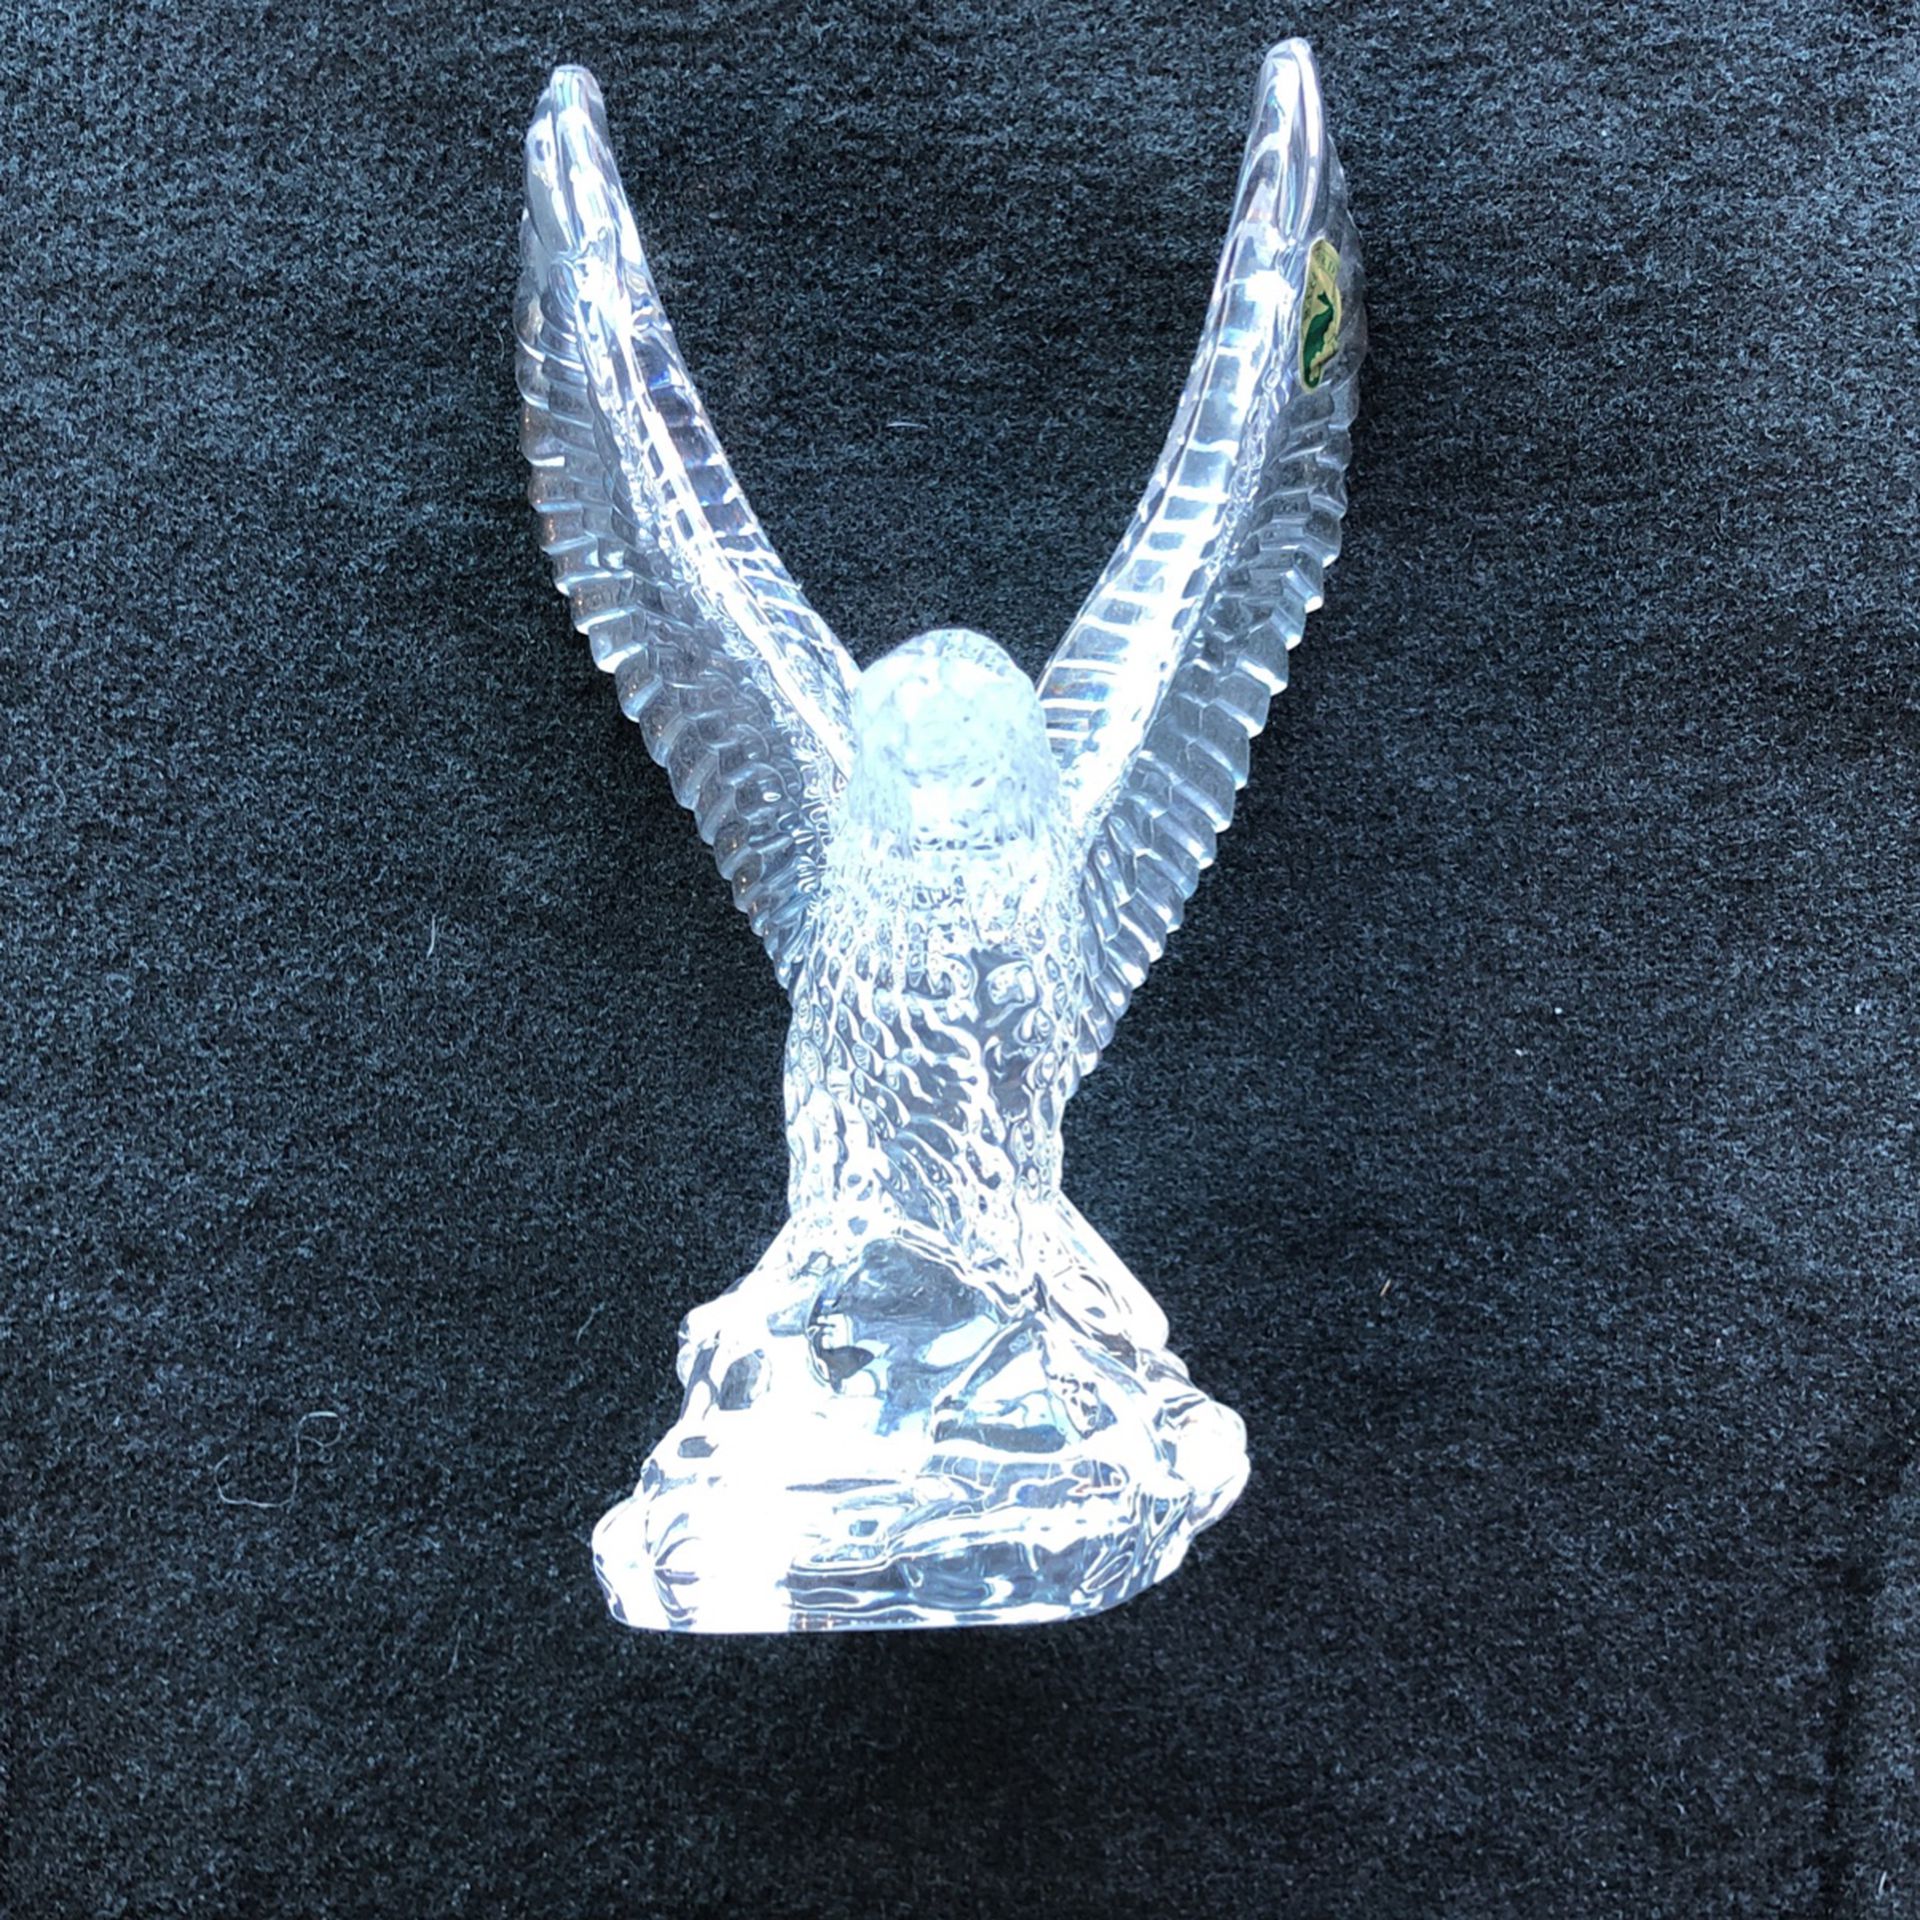 Crystal Eagle